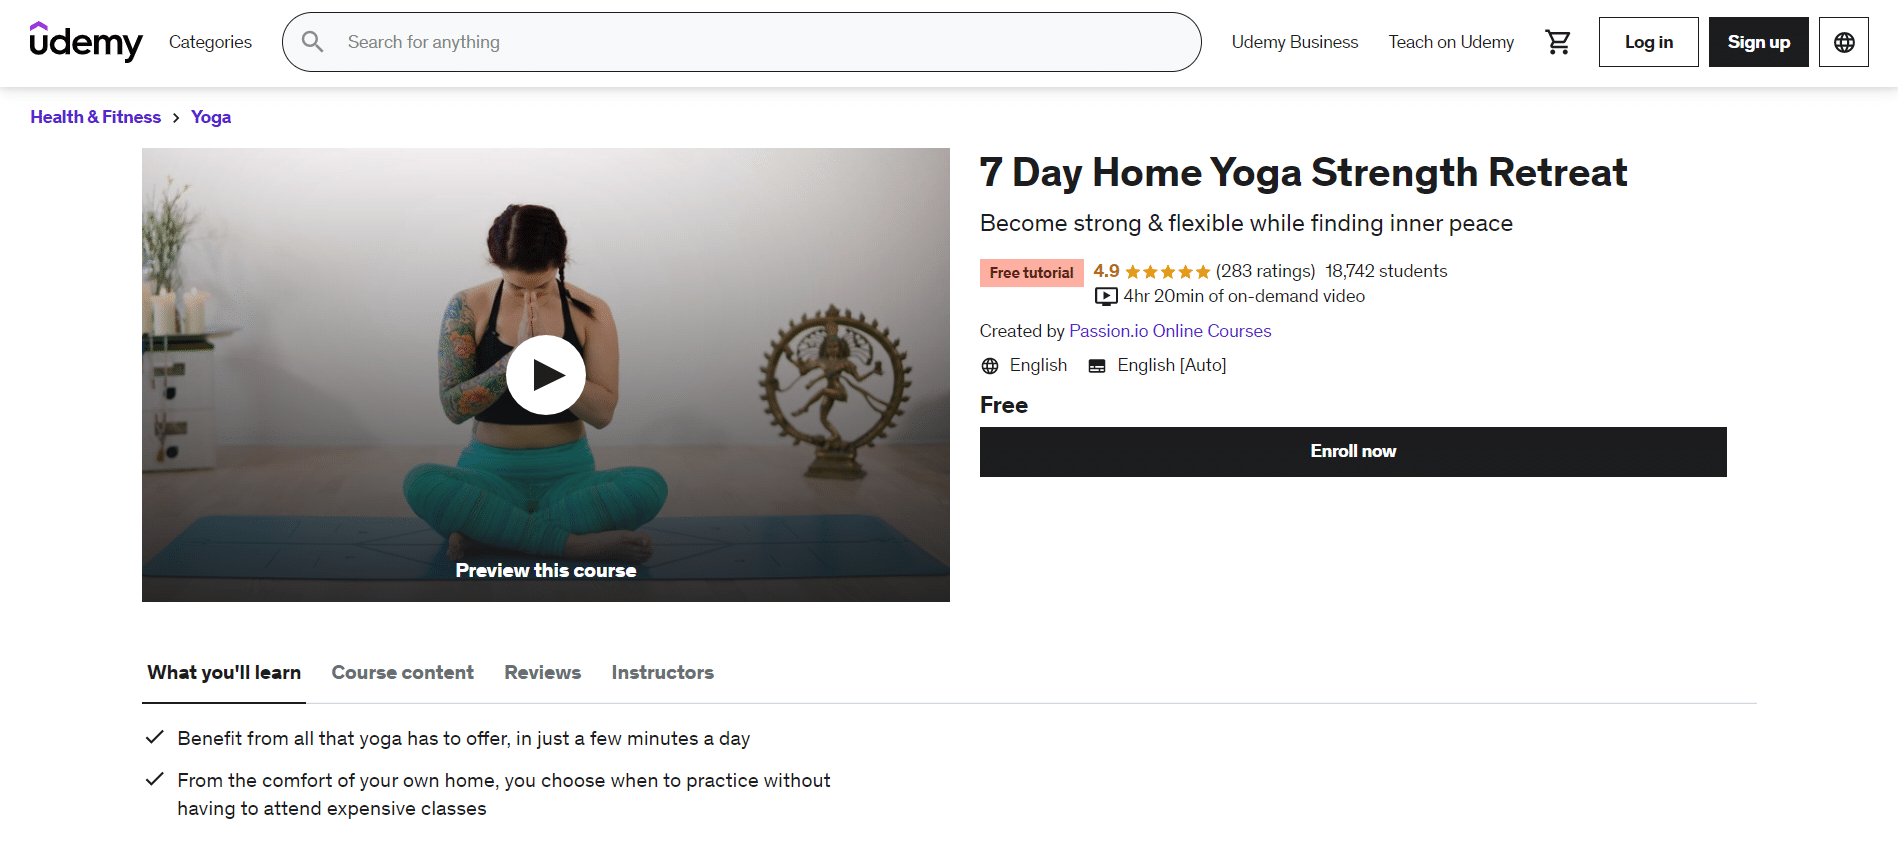 7-Day Home Yoga Strength Retreat